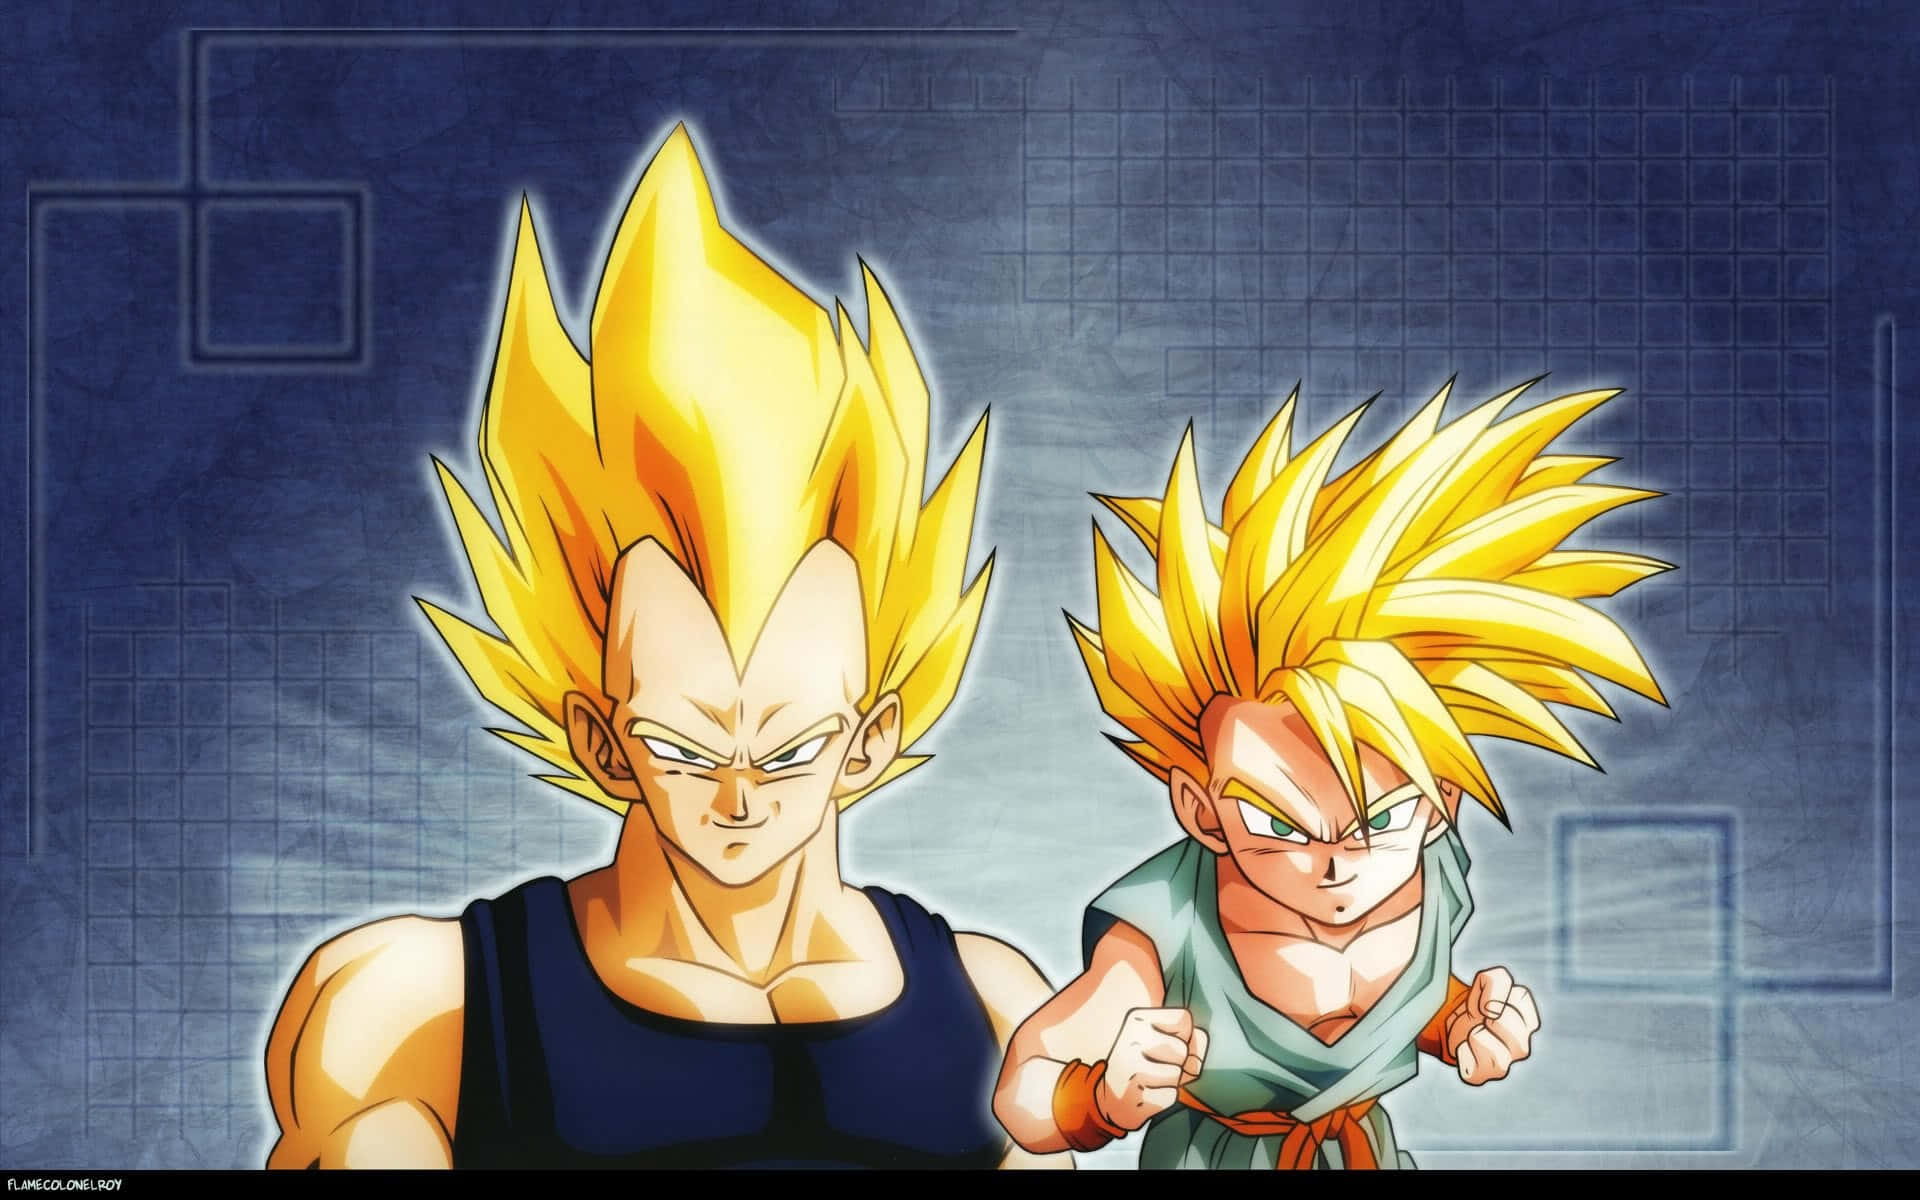 Unlock your Super Saiyan Power with the Goku and Vegeta iPhone Wallpaper